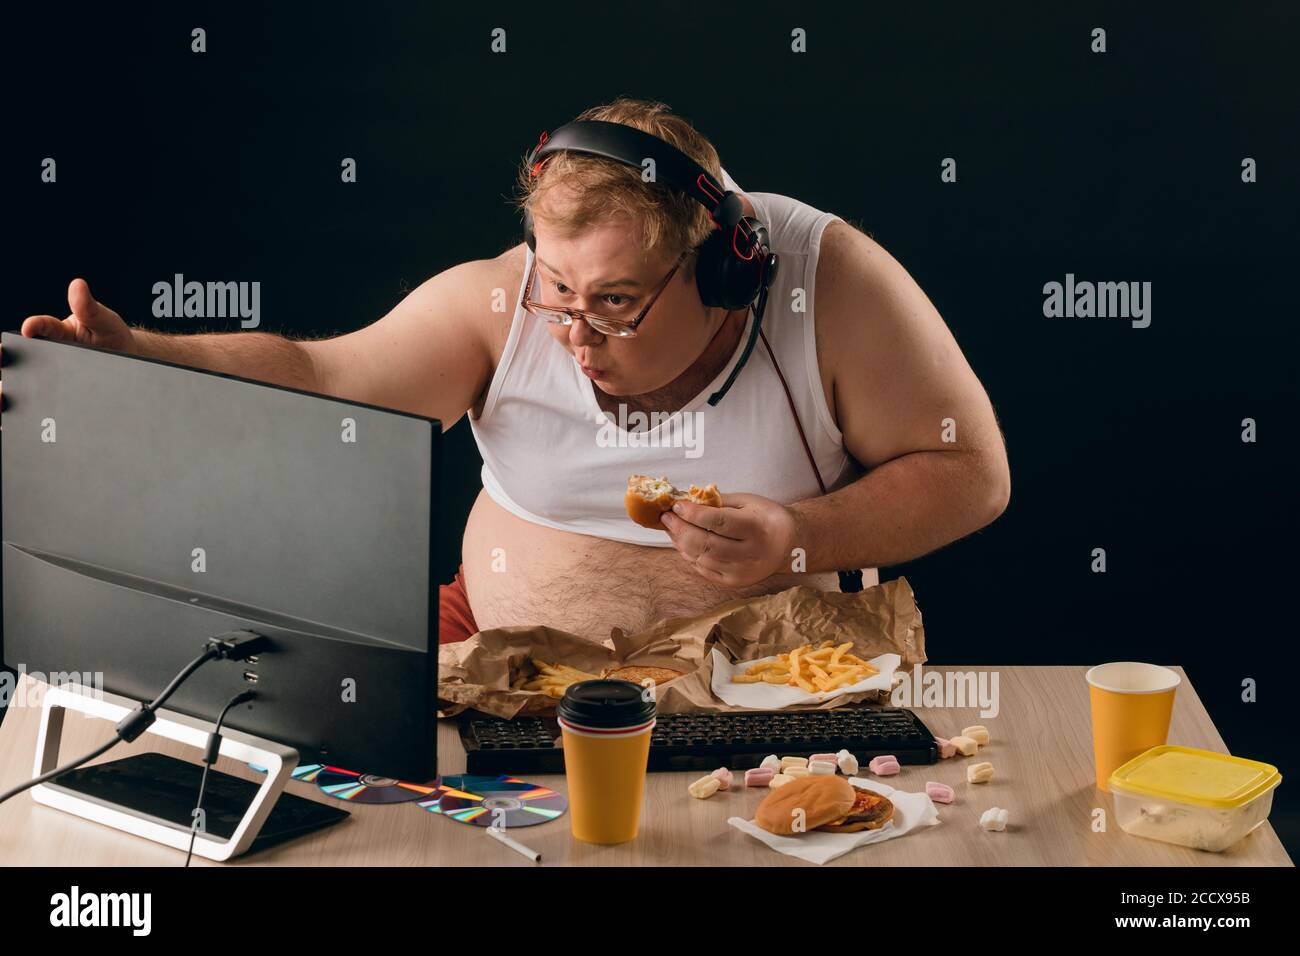 funny-plump-man-staring-at-the-screen-of-the-computer-and-eating-a-hamburger-close-up-photostu...jpg